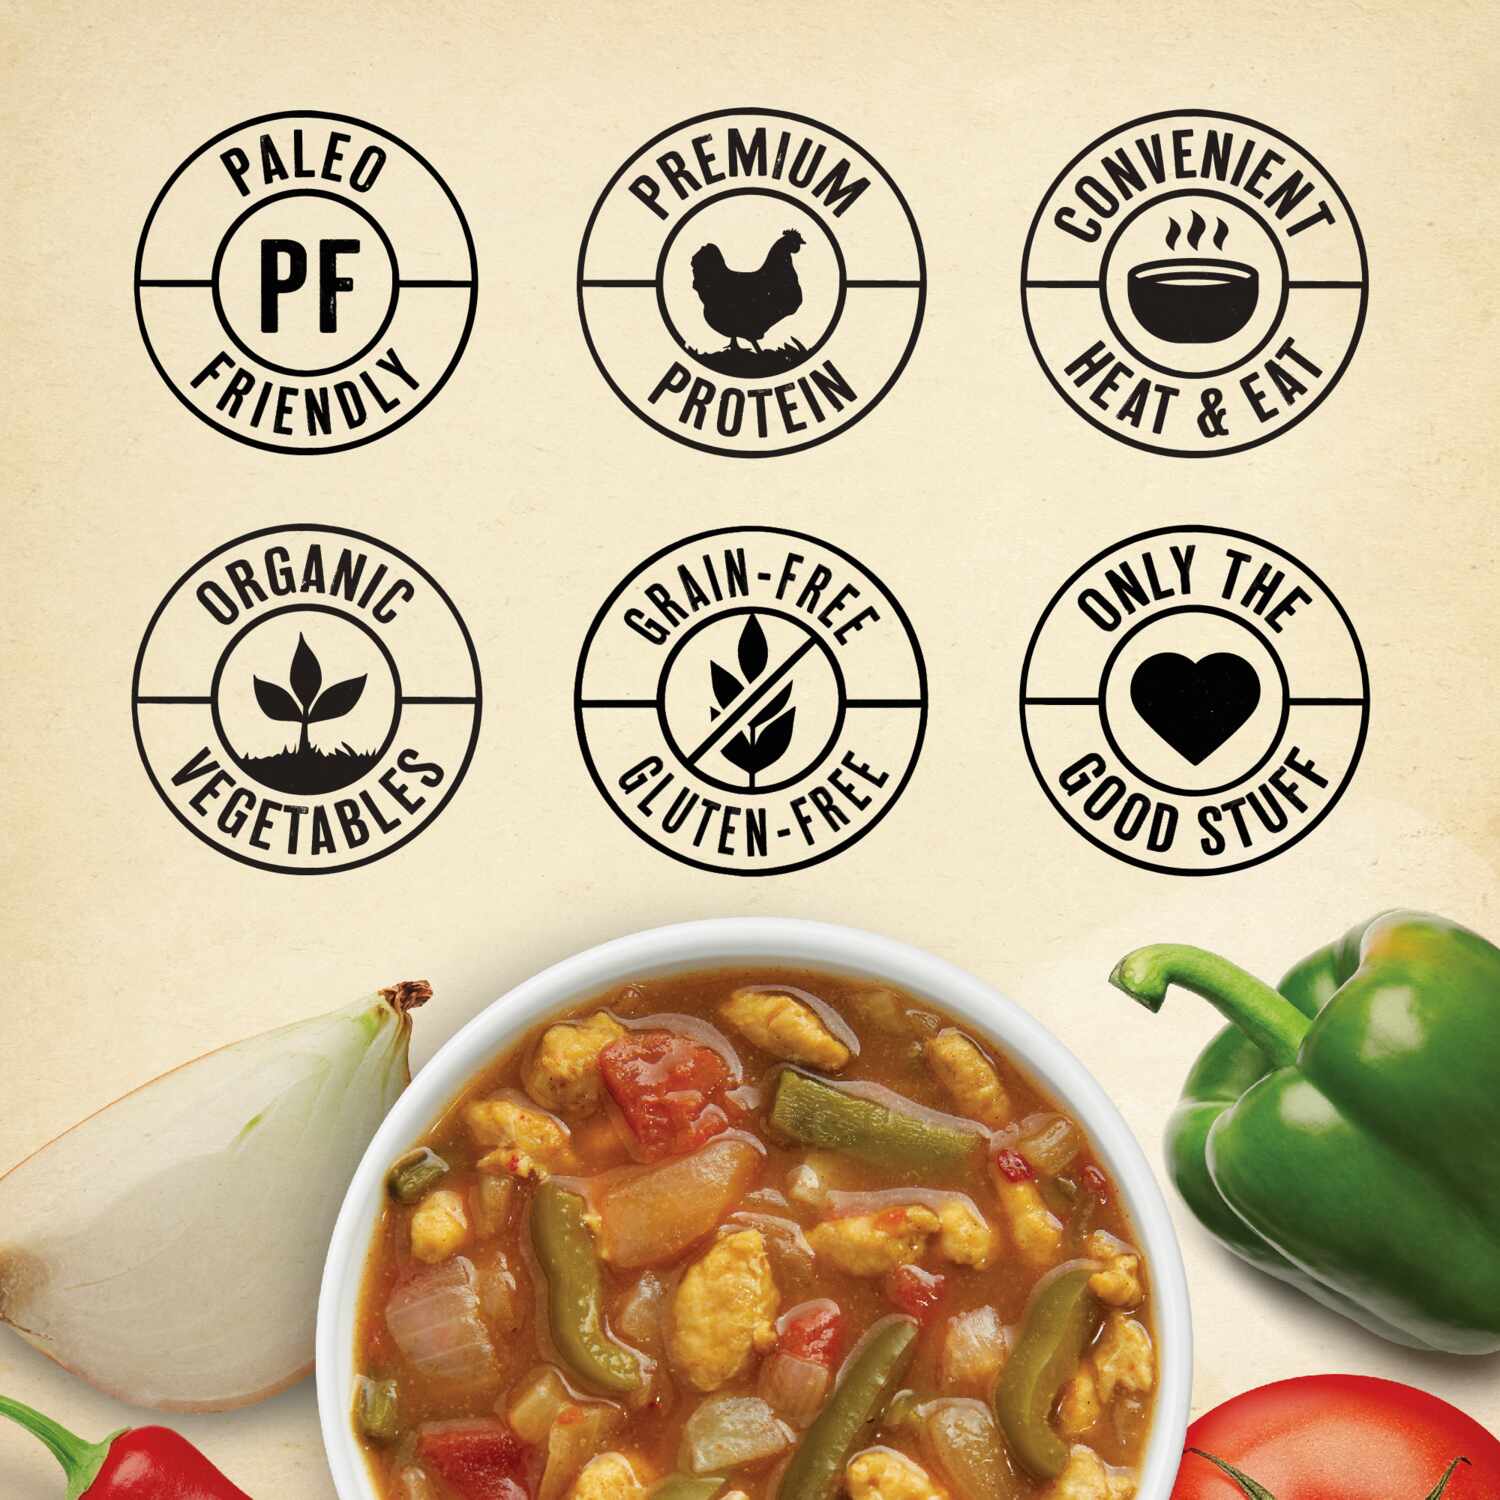 True Primal Southwest-Style Chicken Soup benefits